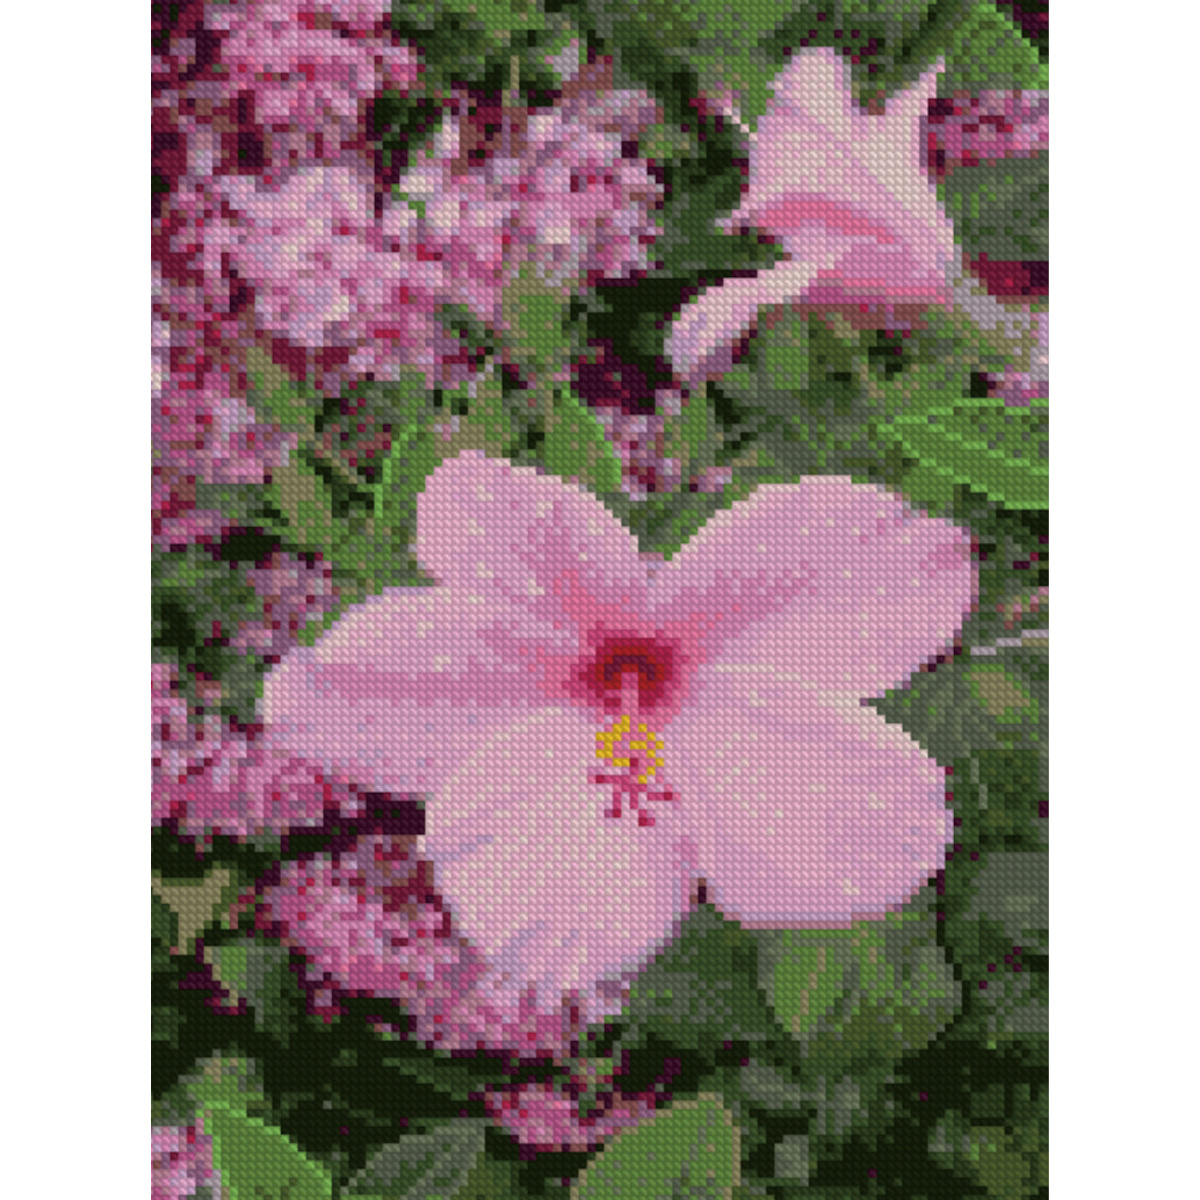 Diamond picture HX158 "Pink flower", size 30x40 cm